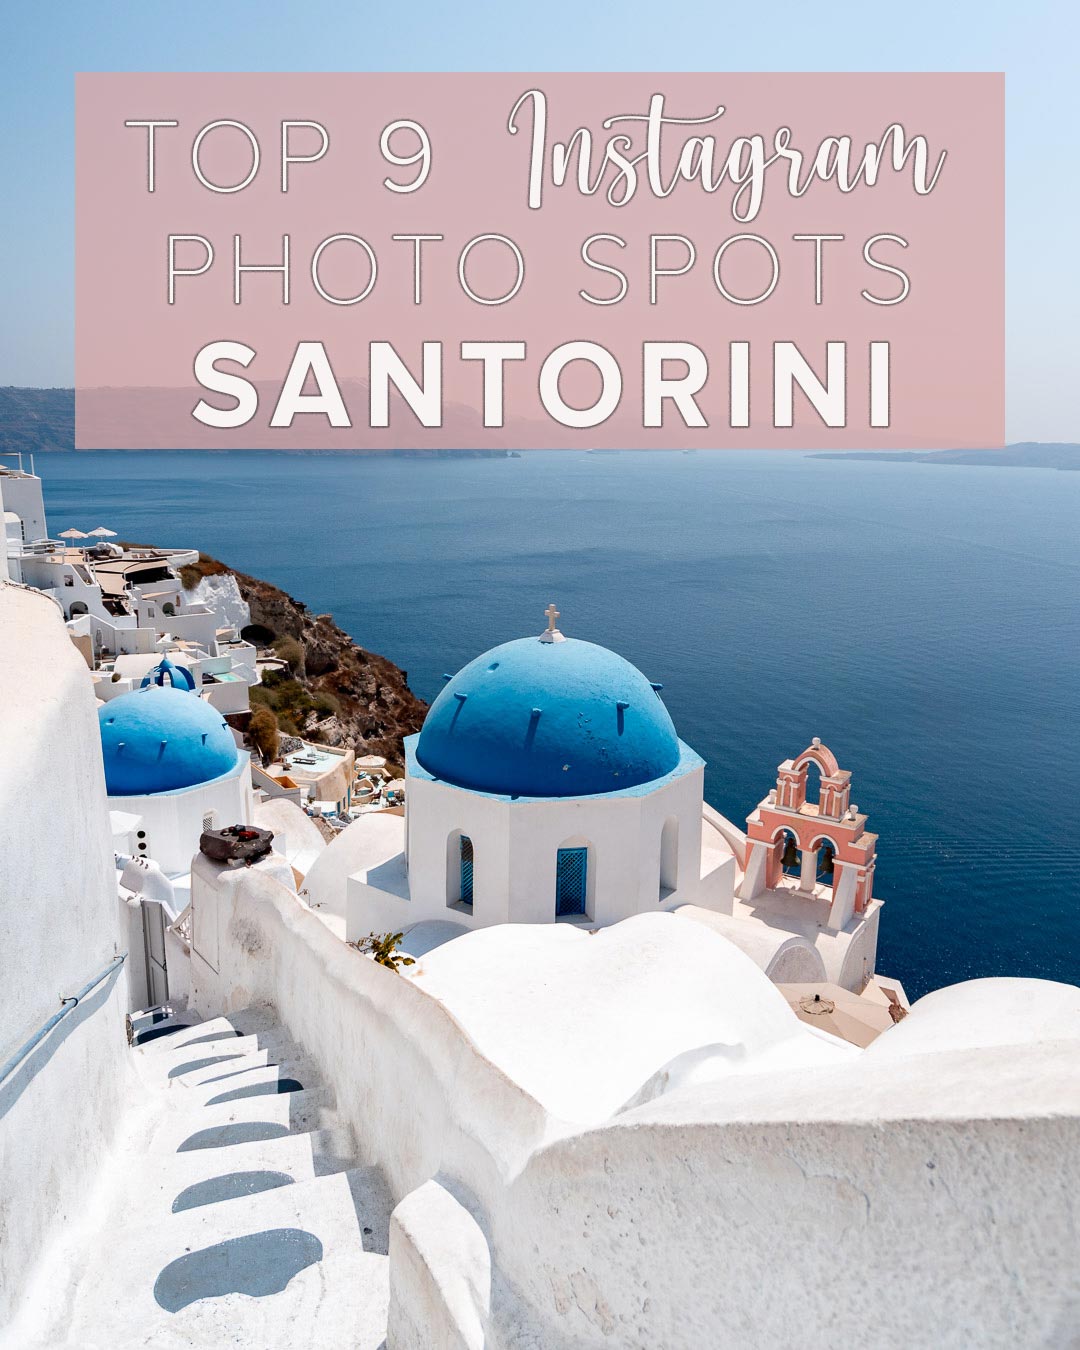 Top 9 Instagram Photo Spots Santorini